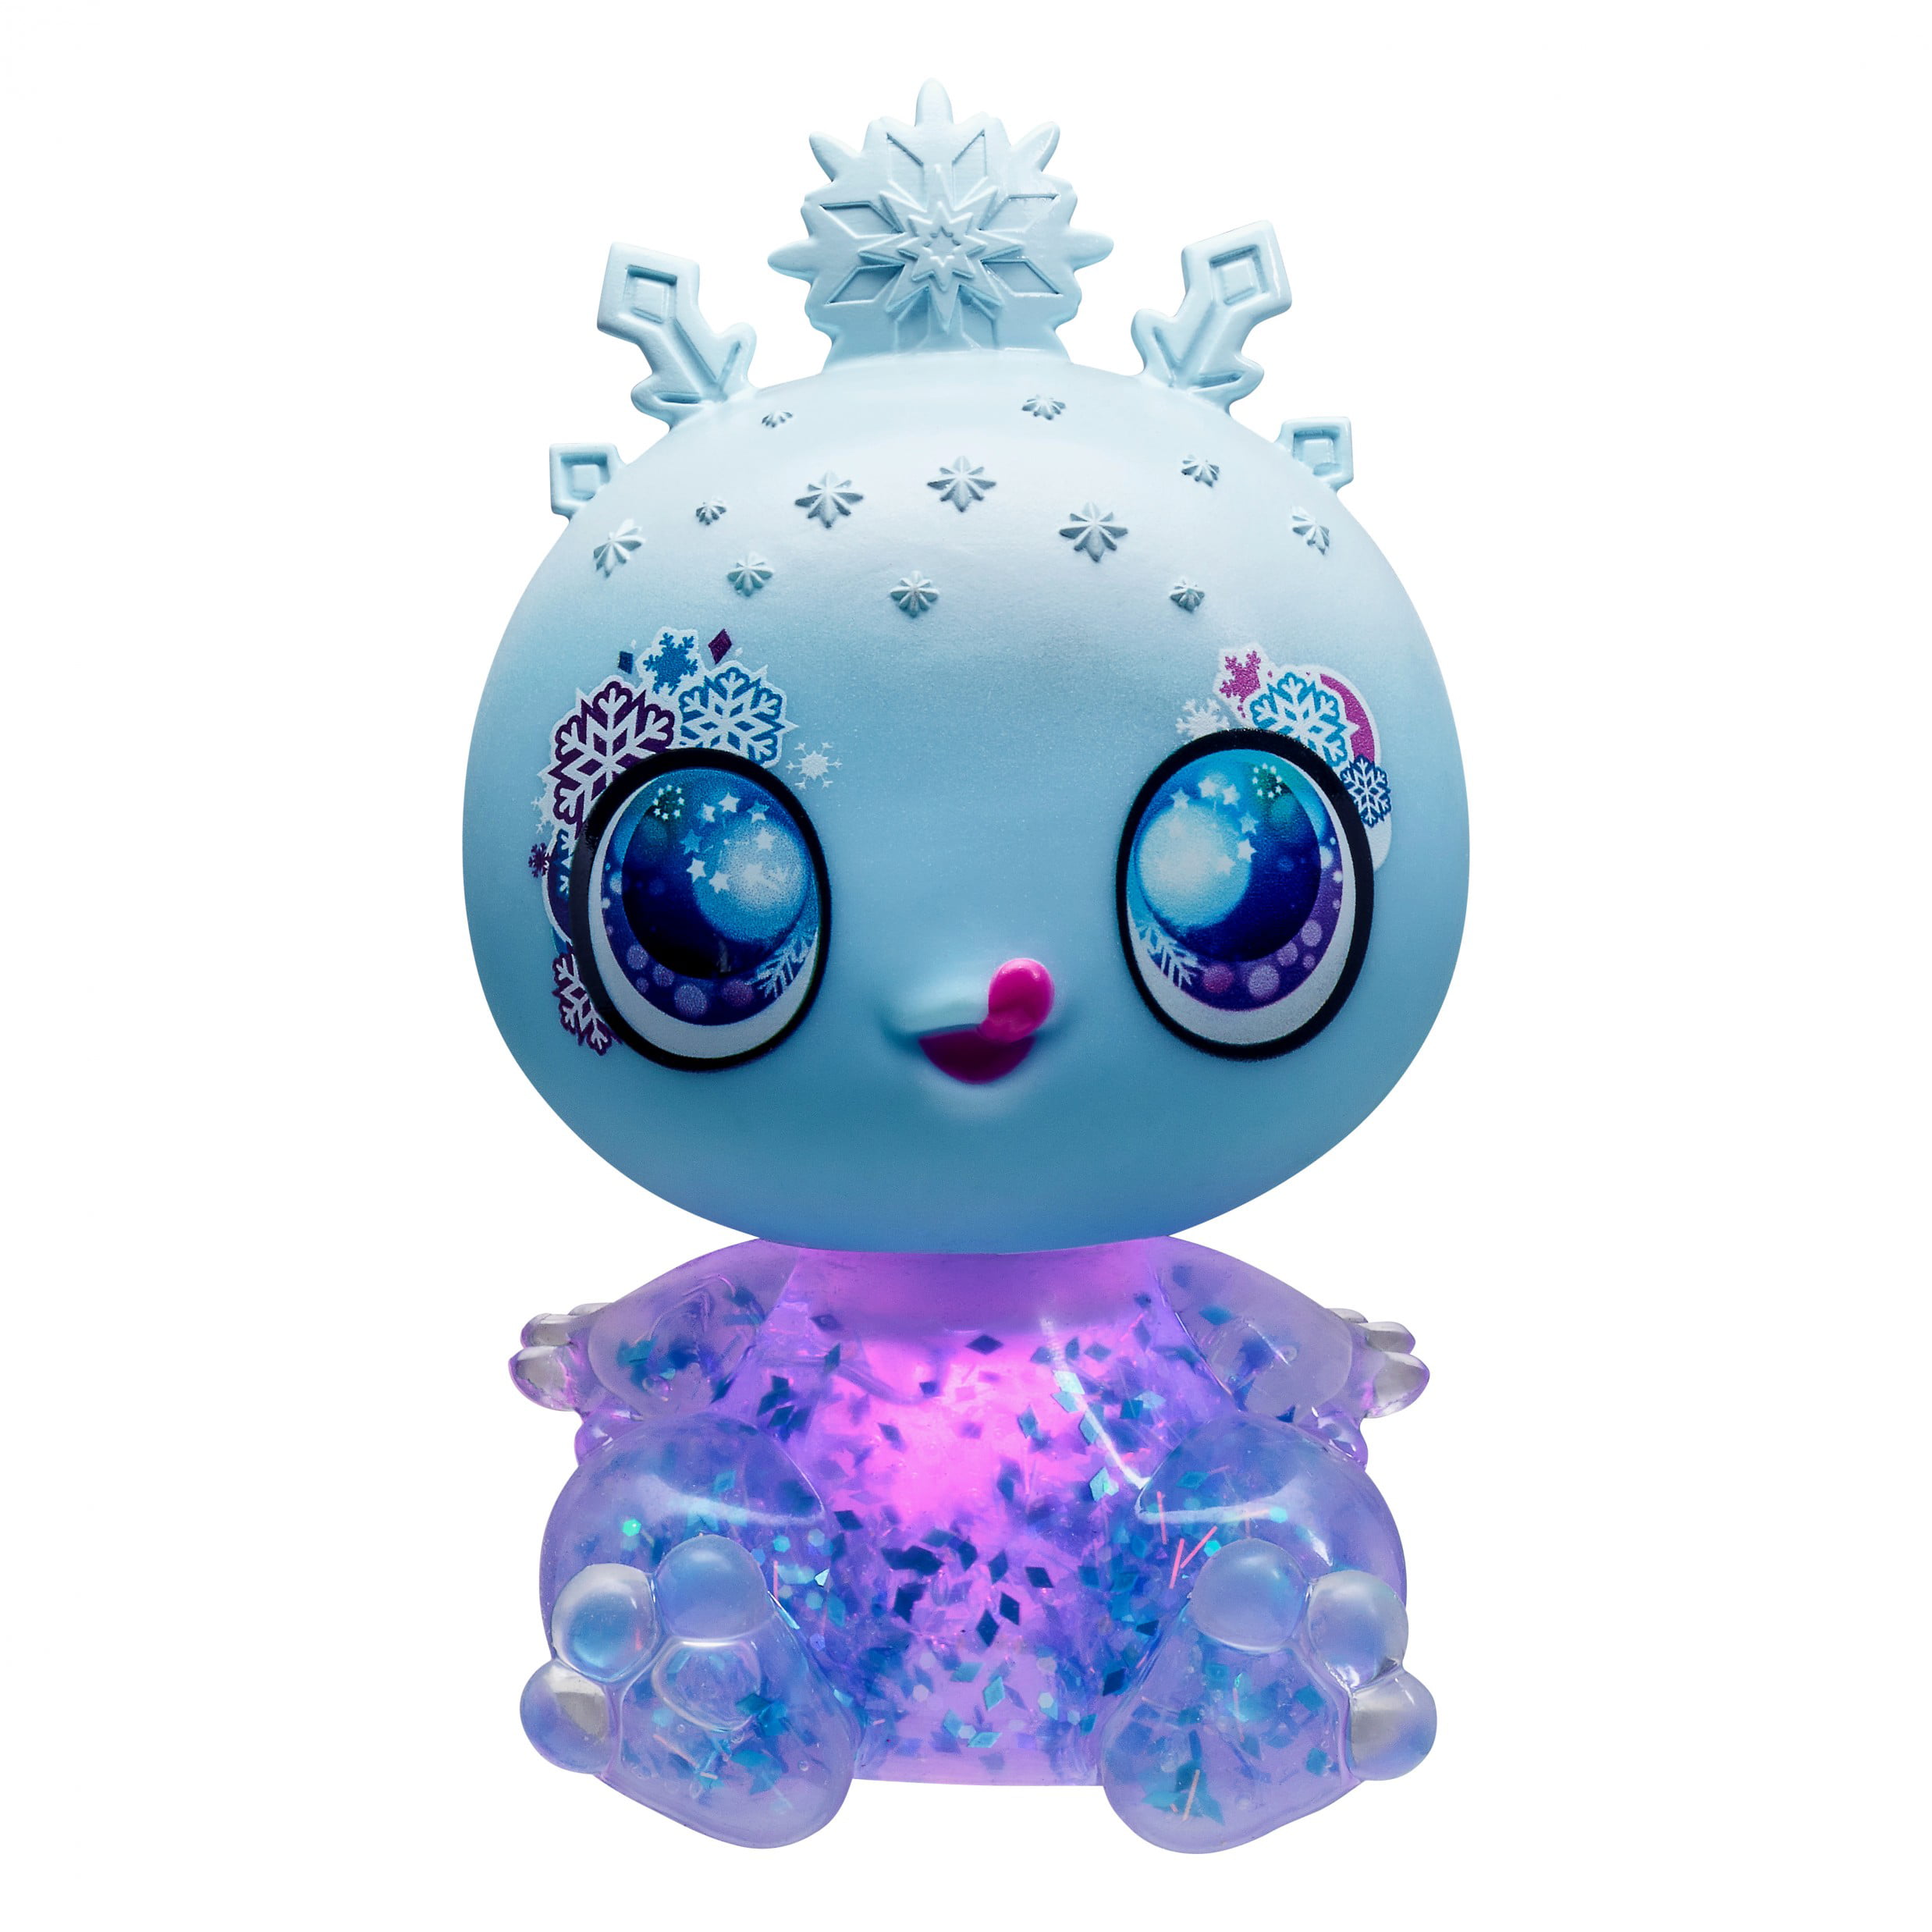 Goo Goo Galaxy Snow Glow Light Up Sensory Galaxy Slime Squish Doll New In Box! 